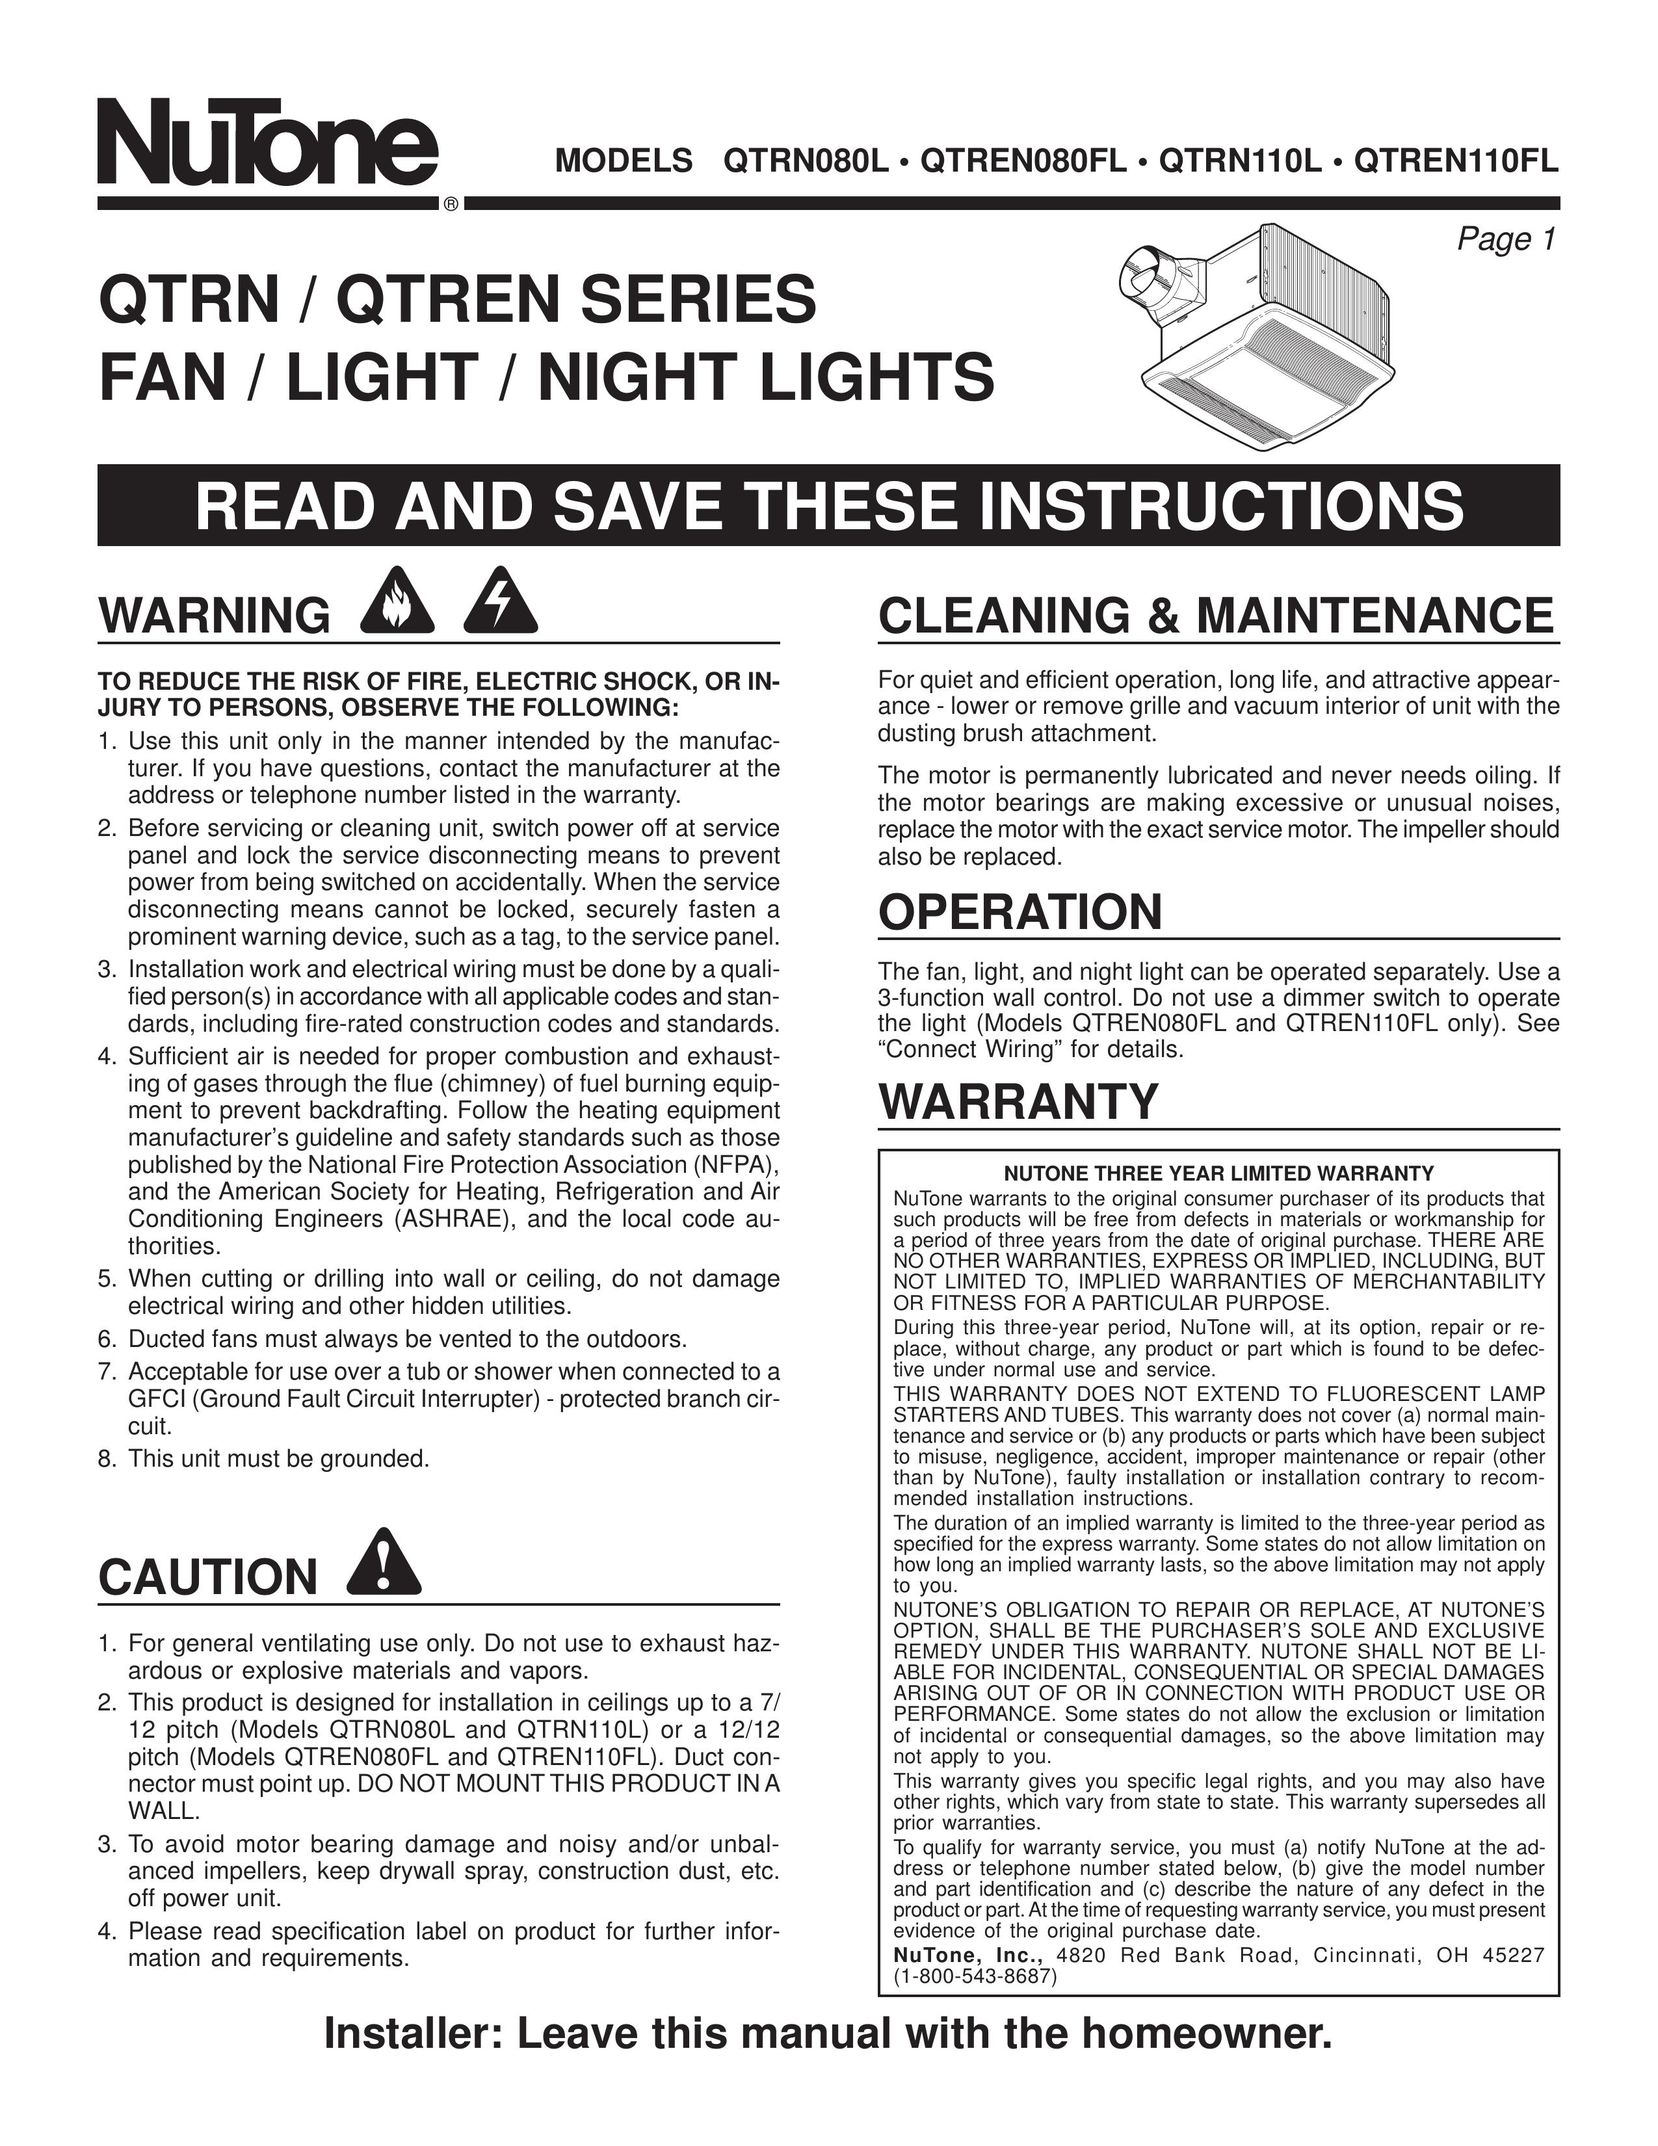 NuTone QTREN080L Dollhouse User Manual